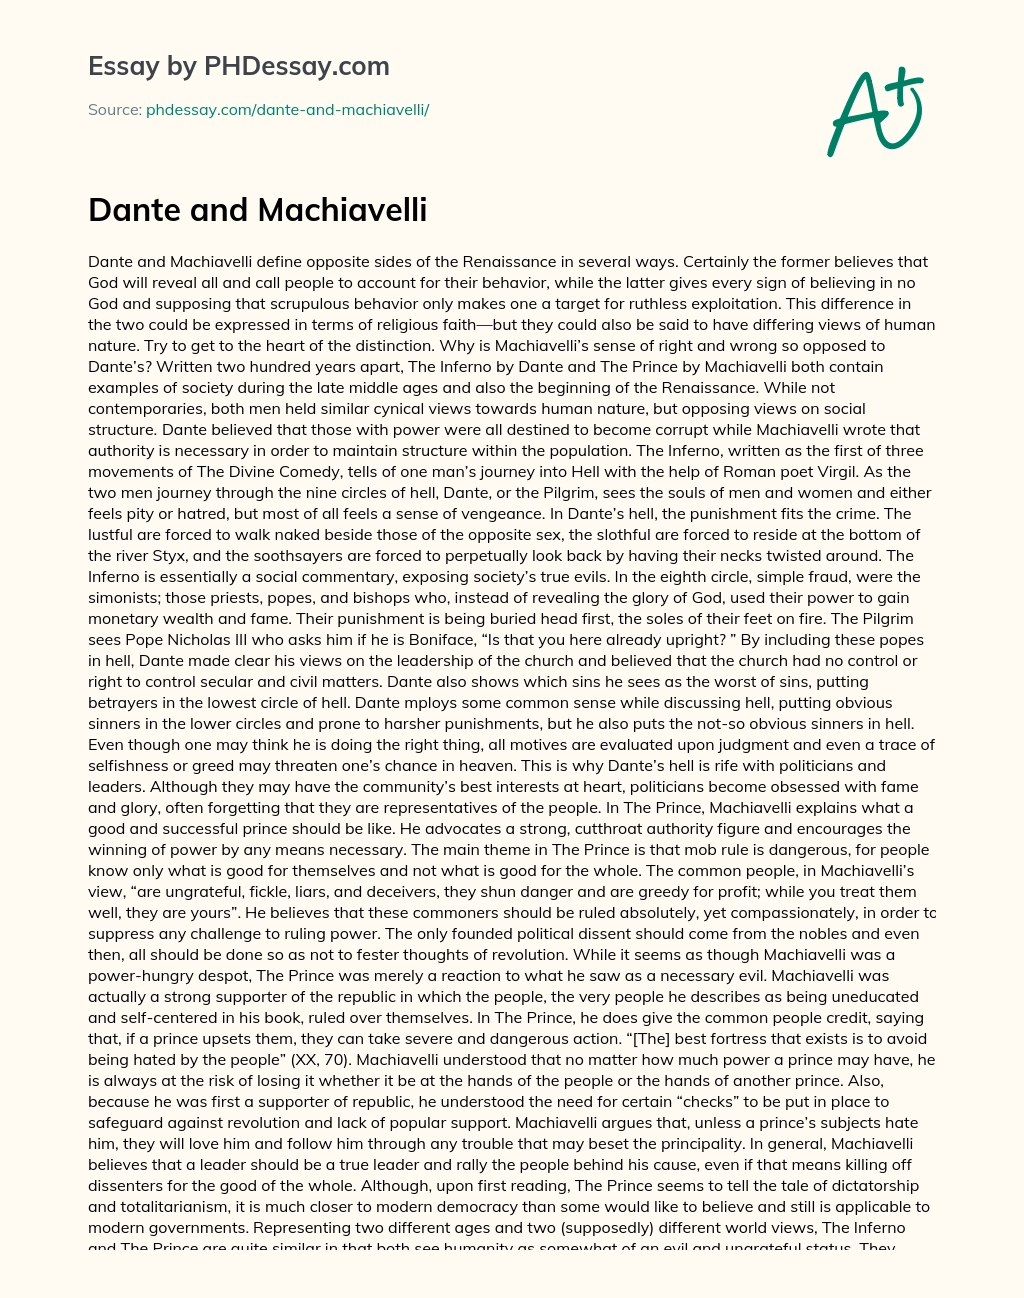 Dante and Machiavelli essay